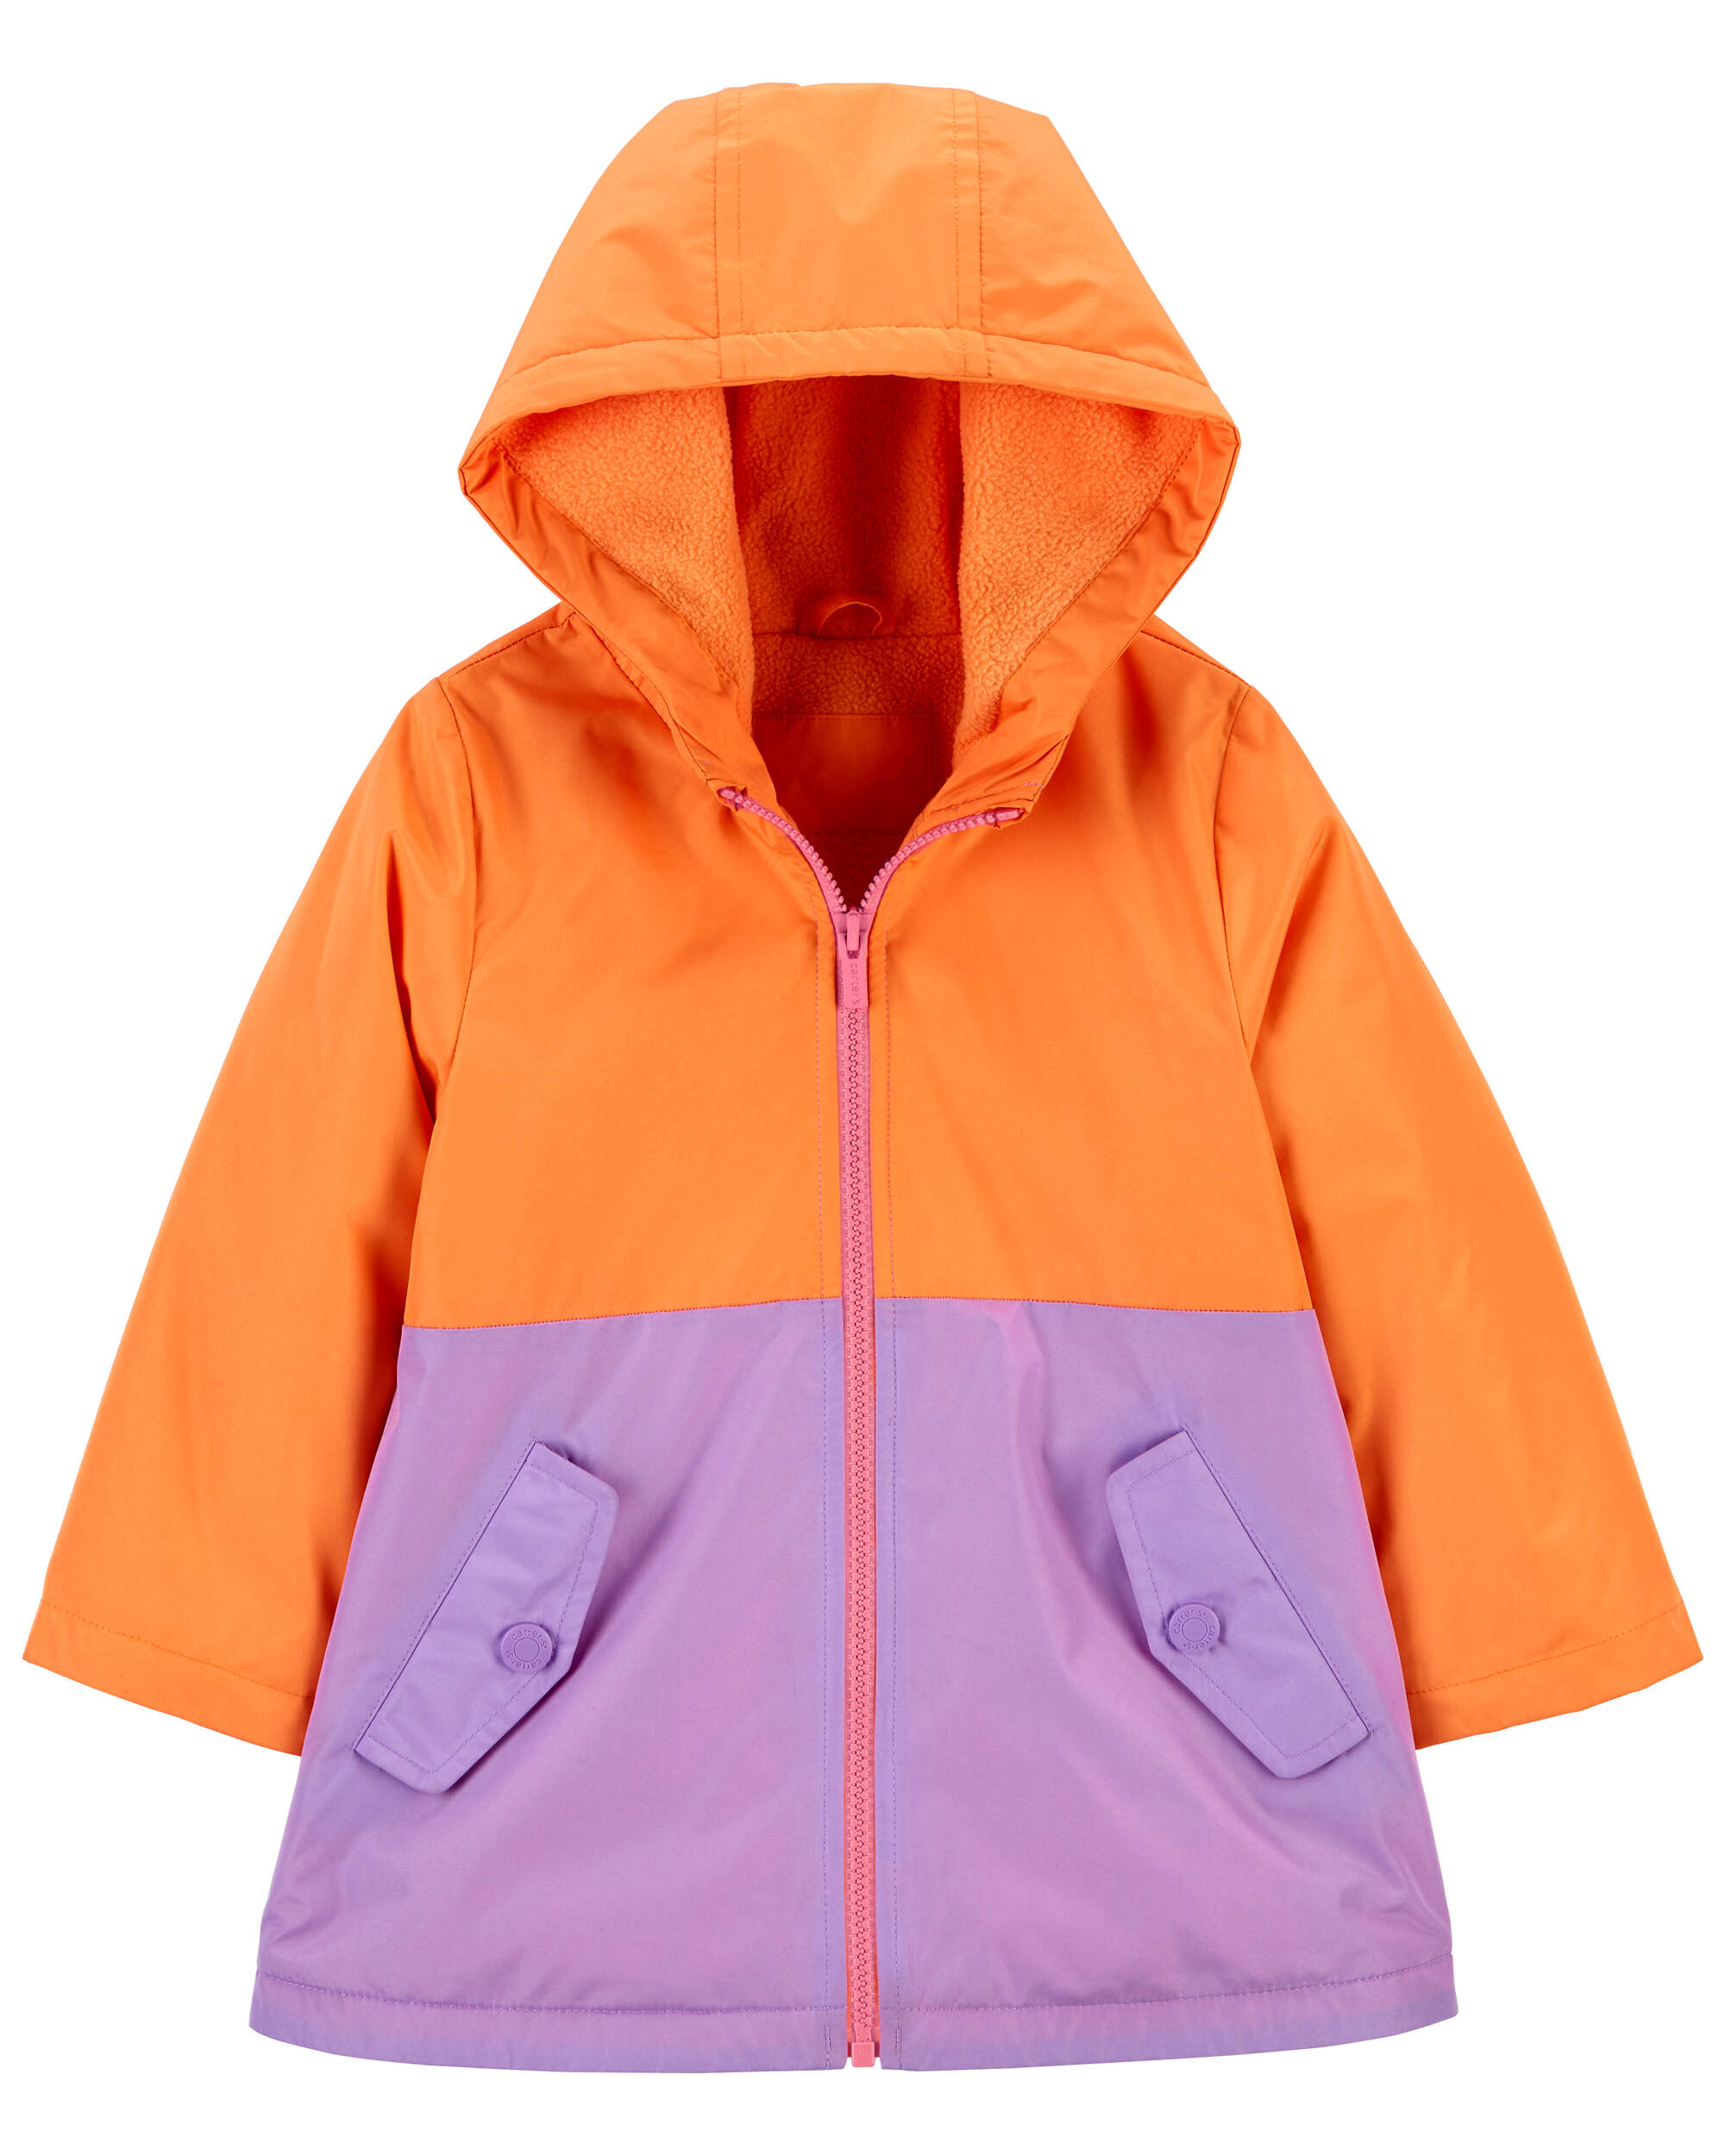 Fleece-Lined Colourblock Rain Jacket